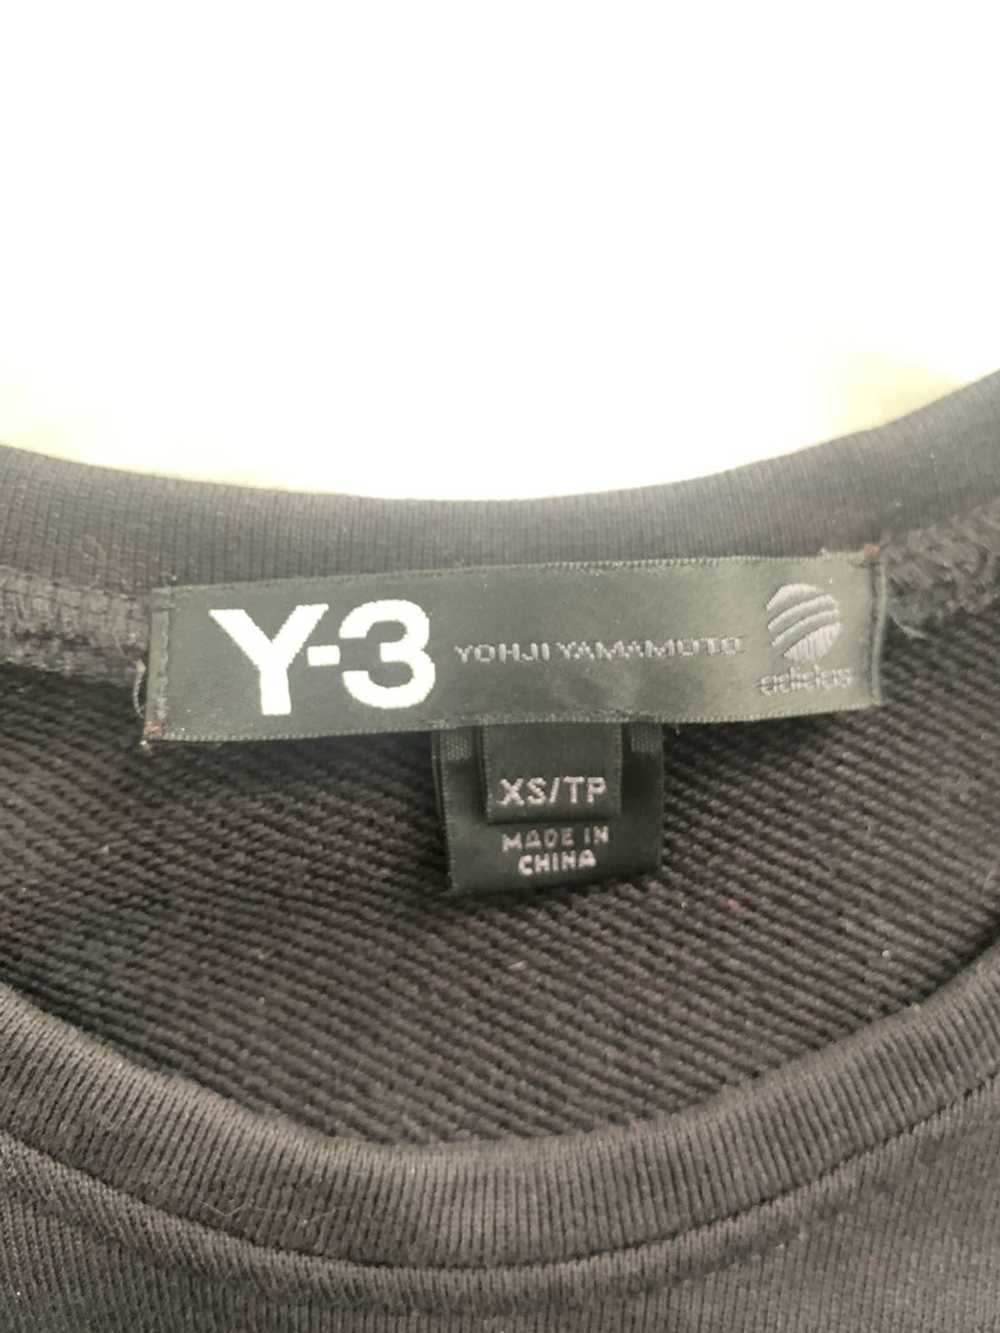 Adidas × Y-3 Yohji Yamamoto x adidas crewneck - image 2